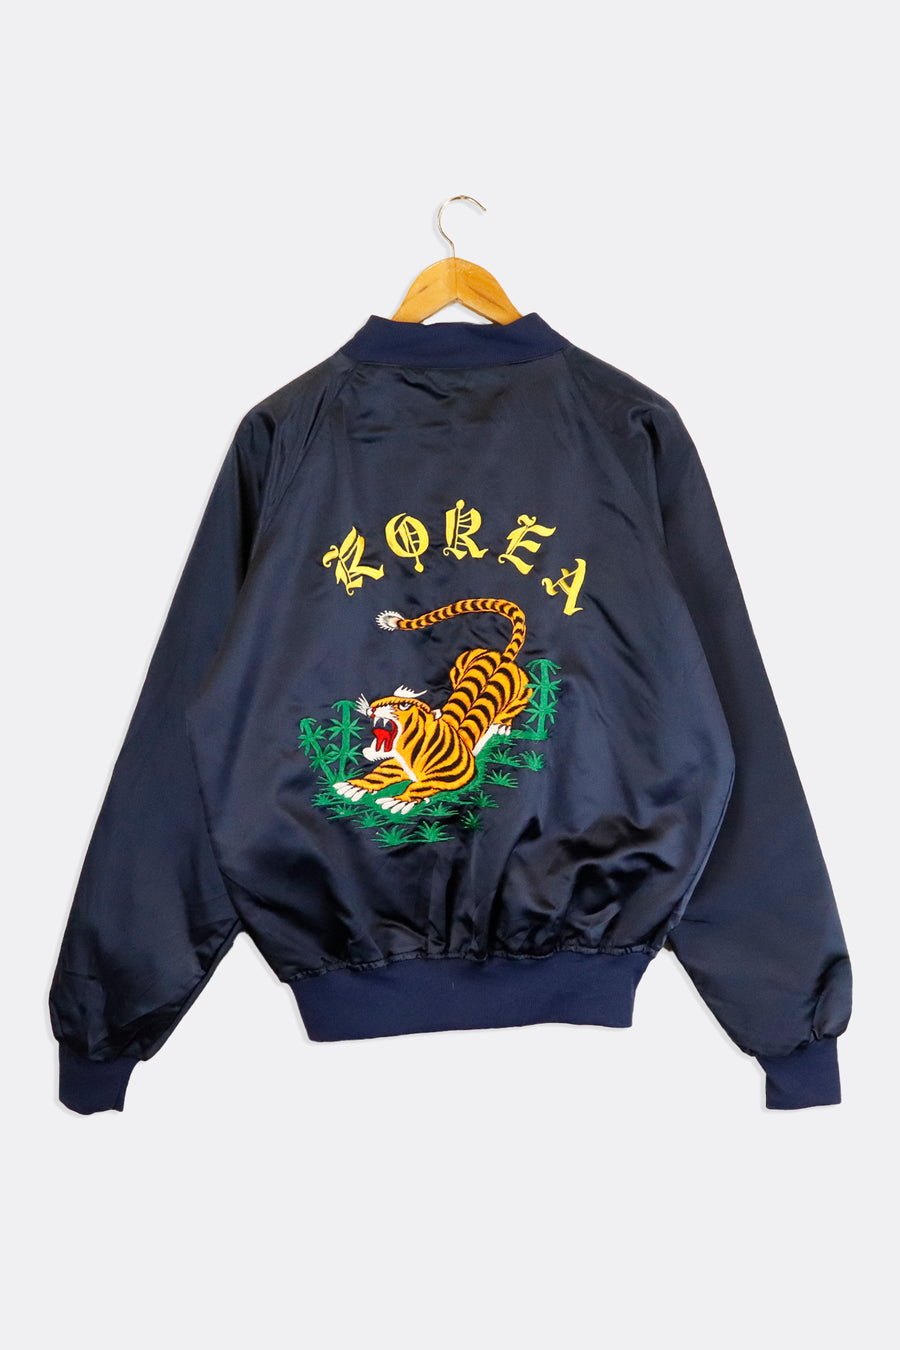 Vintage Bomber Korea Embroidered Name Richard And Tiger Outerwear Sz XL